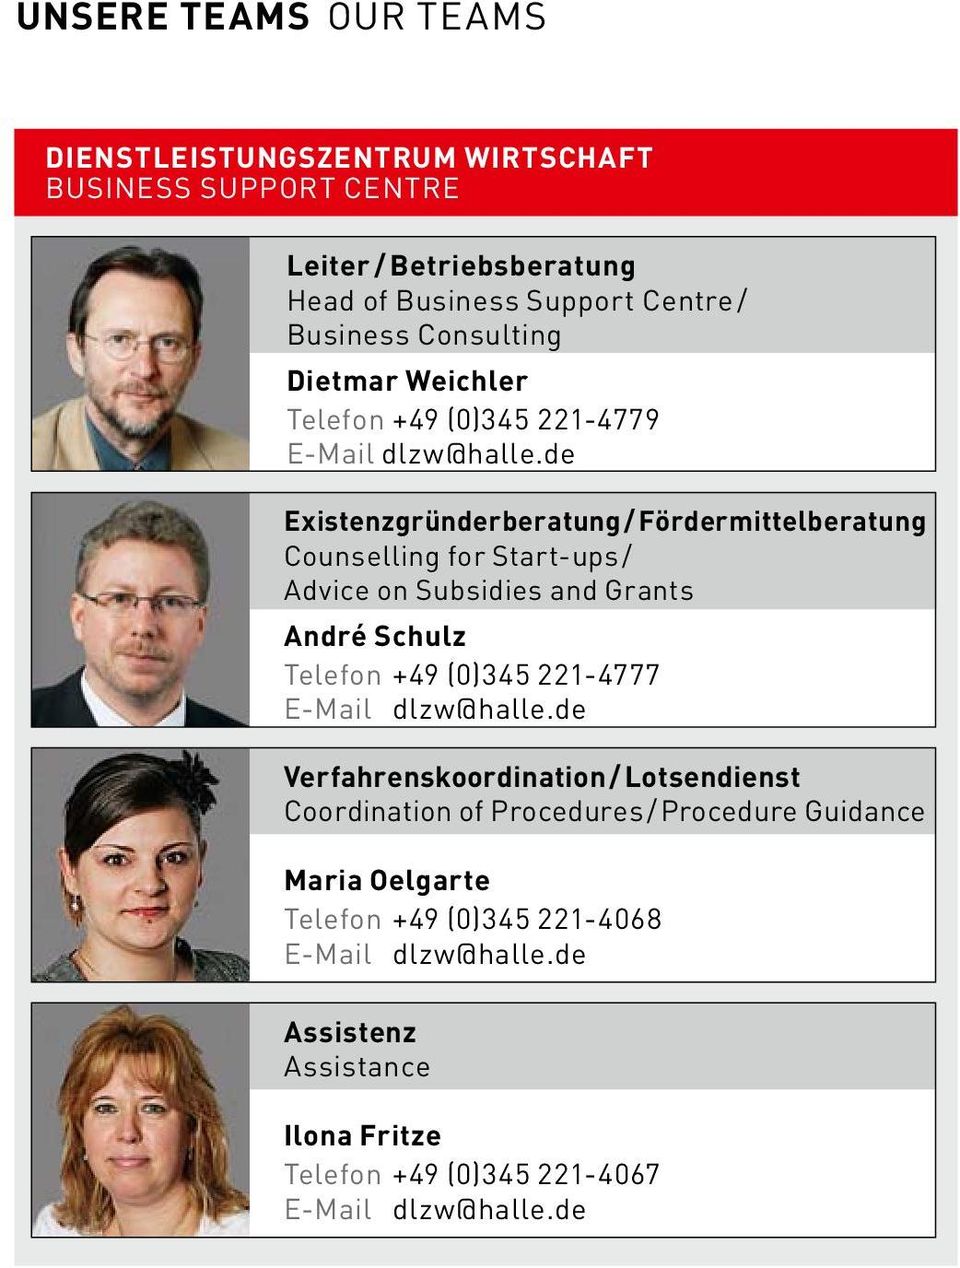 de Existenzgründerberatung / Fördermittelberatung Counselling for Start-ups / Advice on Subsidies and Grants André Schulz Telefon +49 (0)345 221-4777 E-Mail